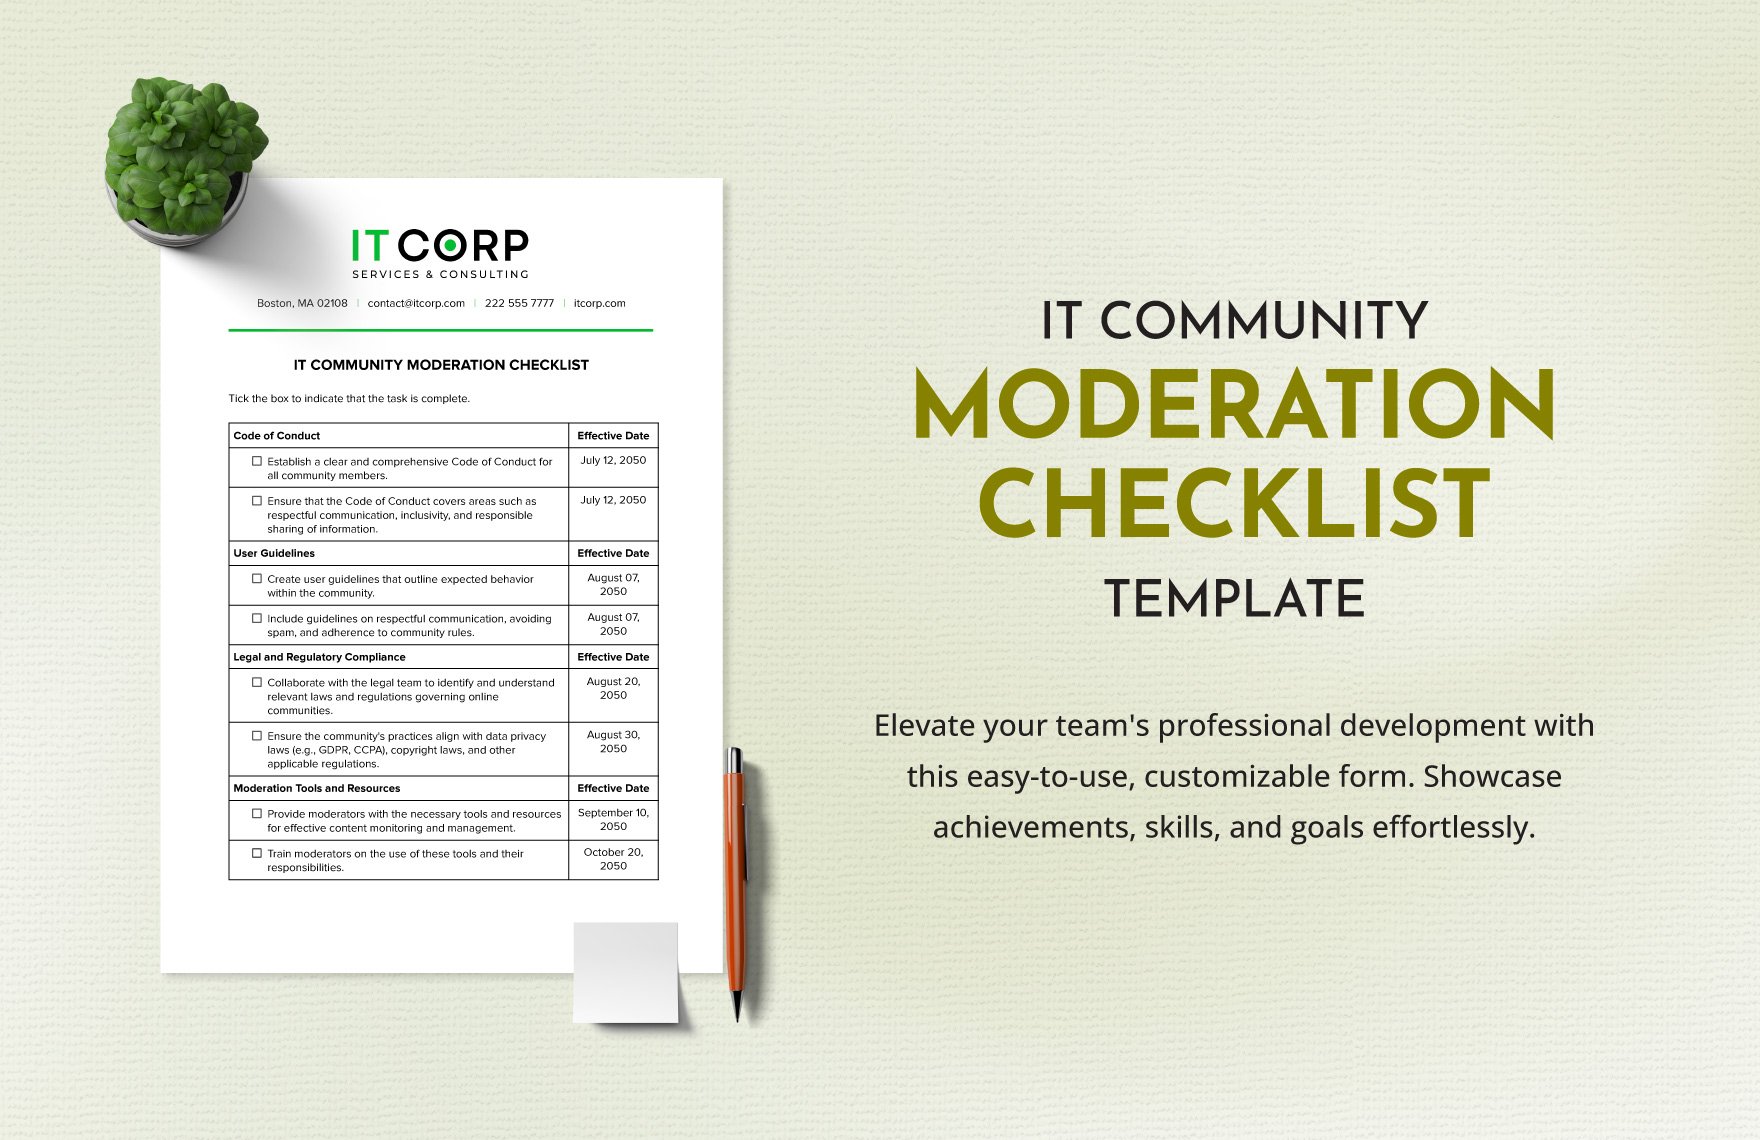 IT Community Moderation Checklist Template